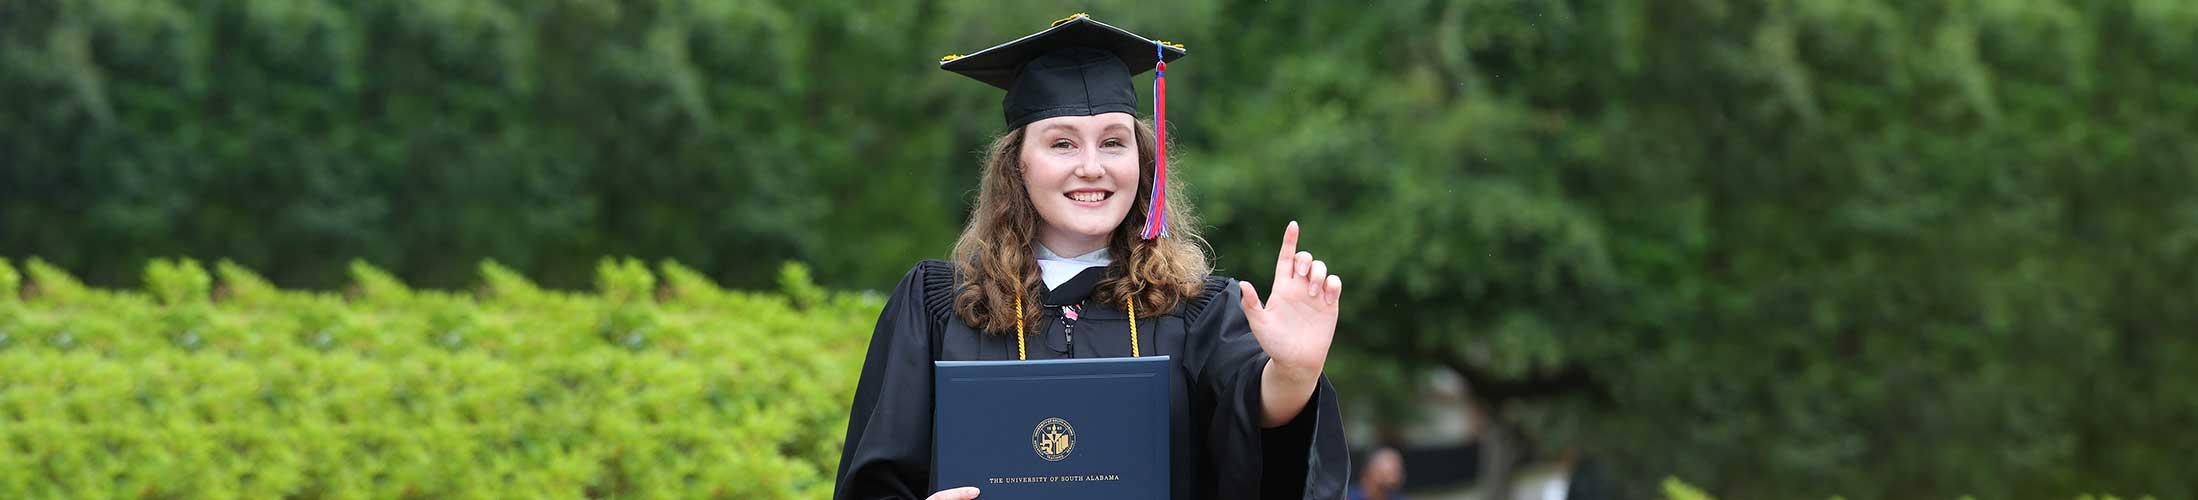 Student holding up J Sign at graduation